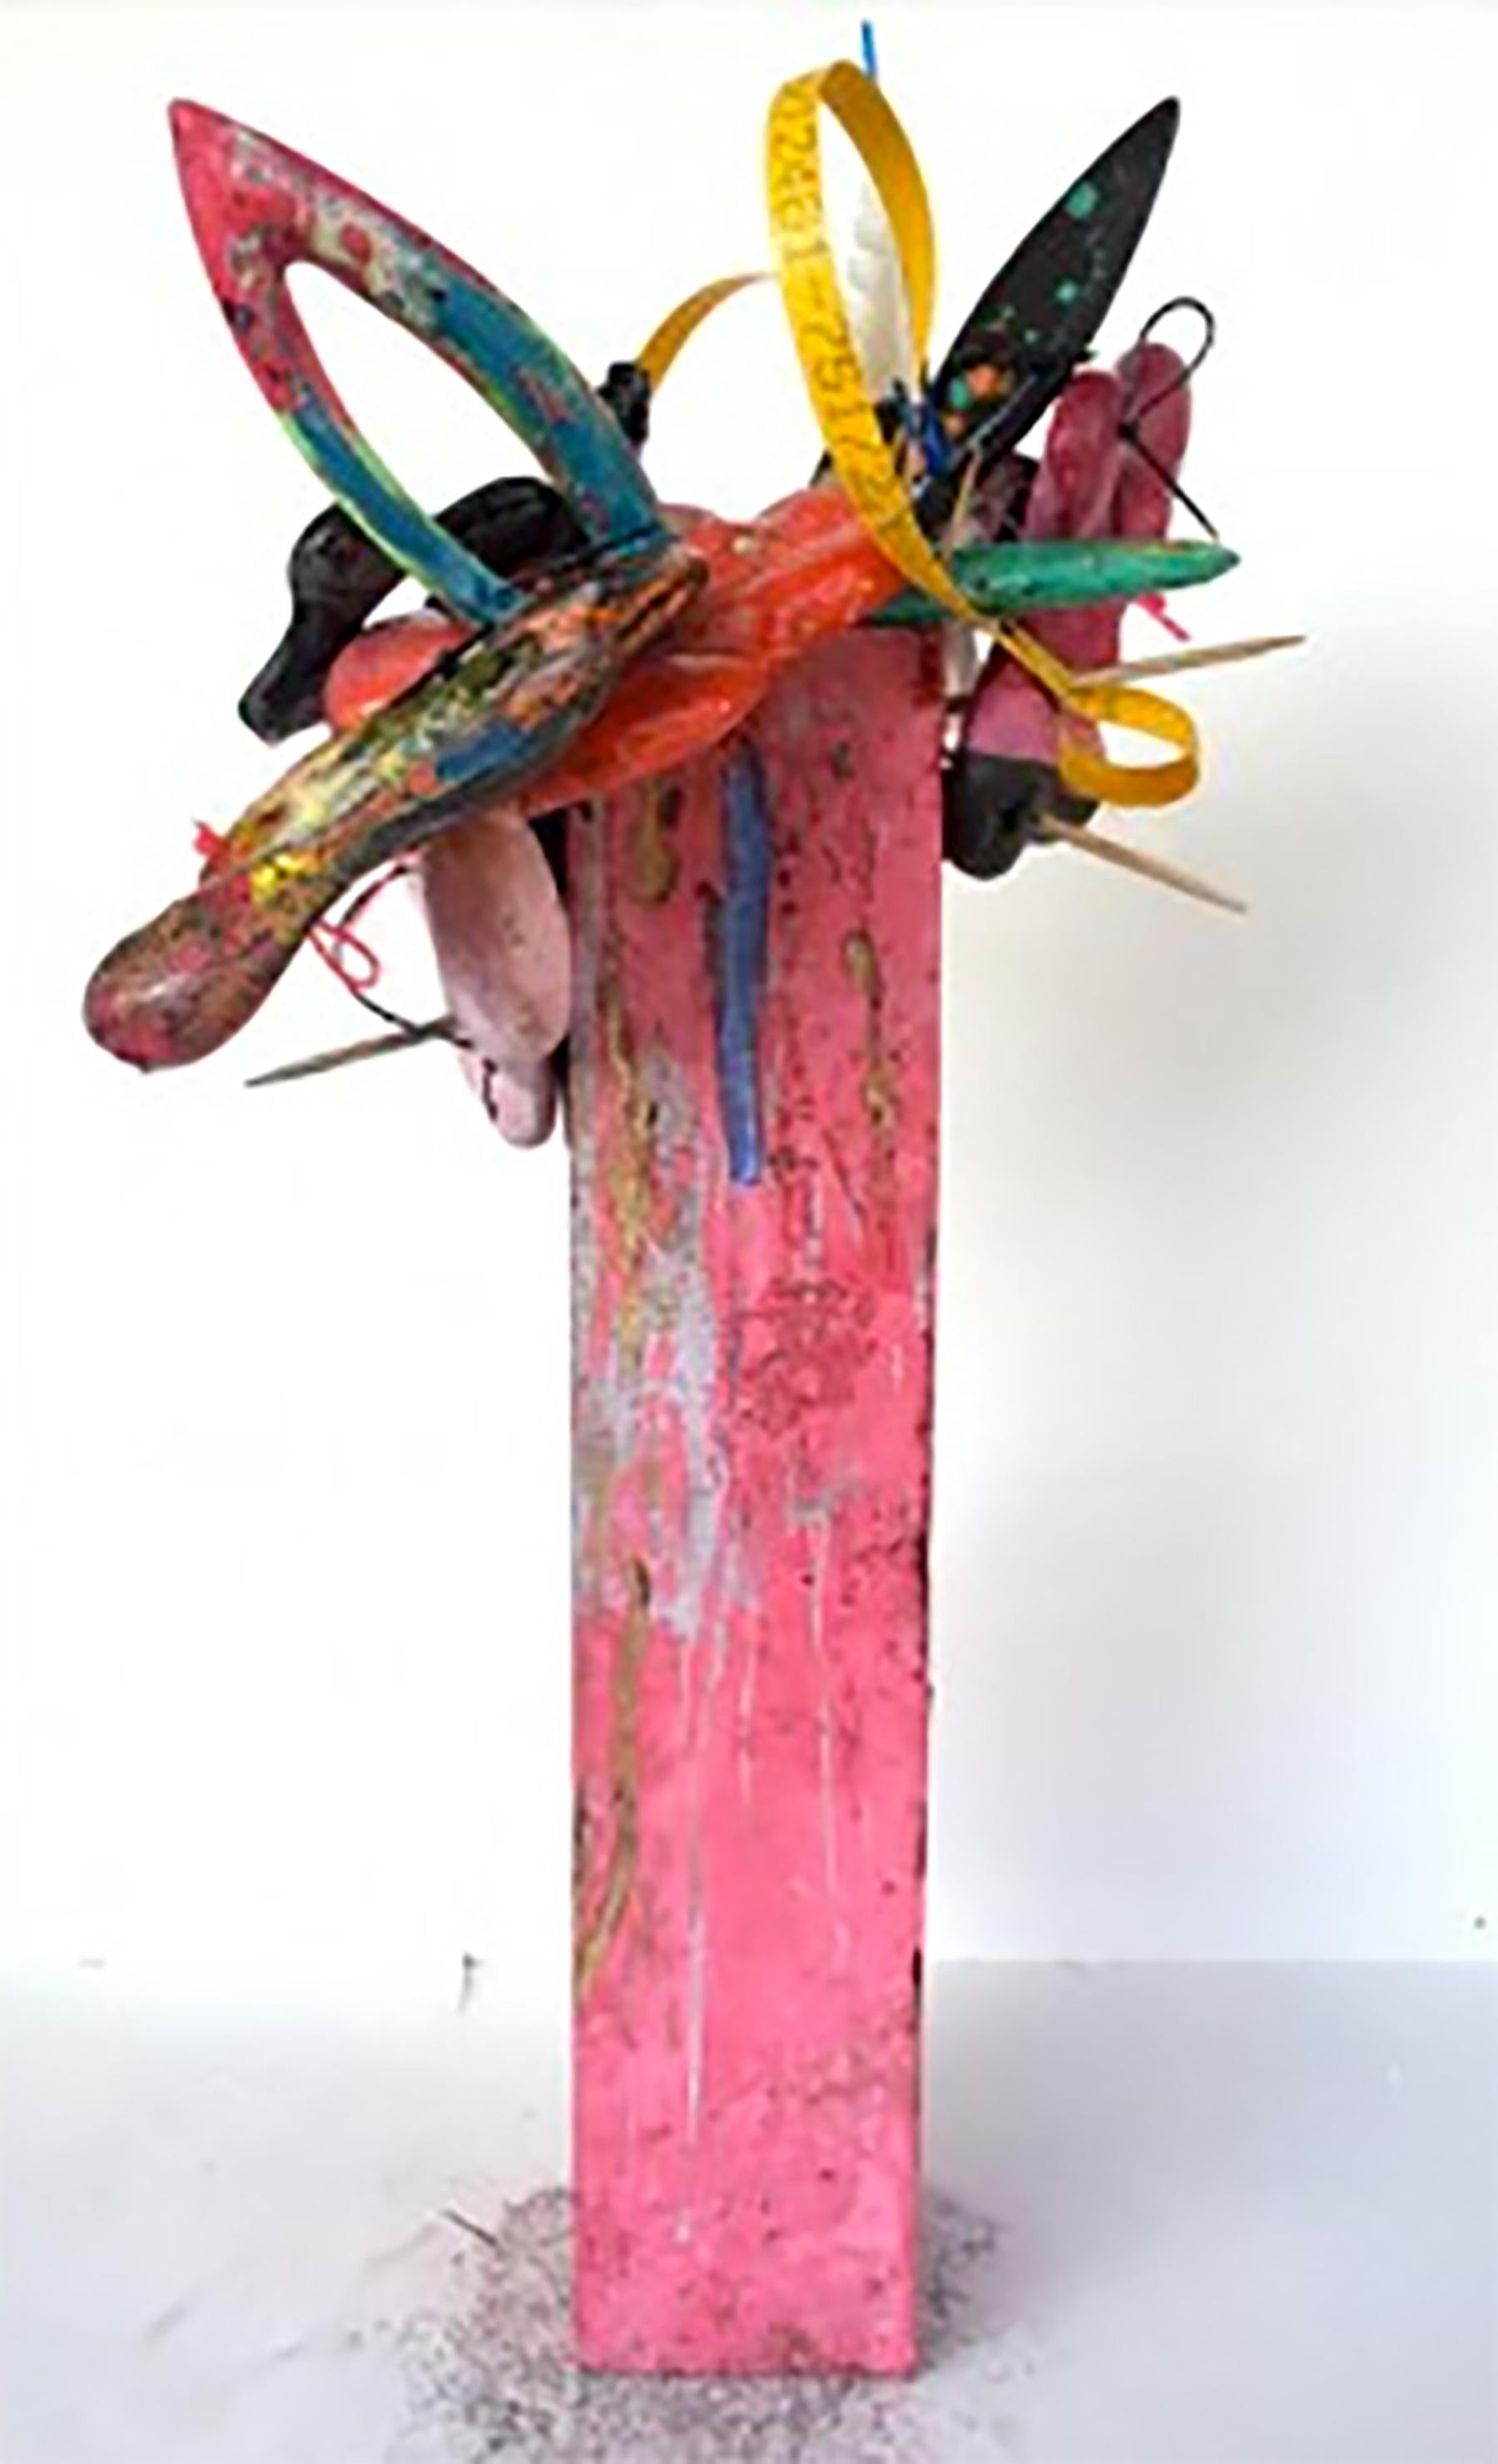 Duane Paul Abstract Sculpture - "Abstract Arrangement -  Cement, Resin, Plastic, Zip-ties, Industrial Strapping